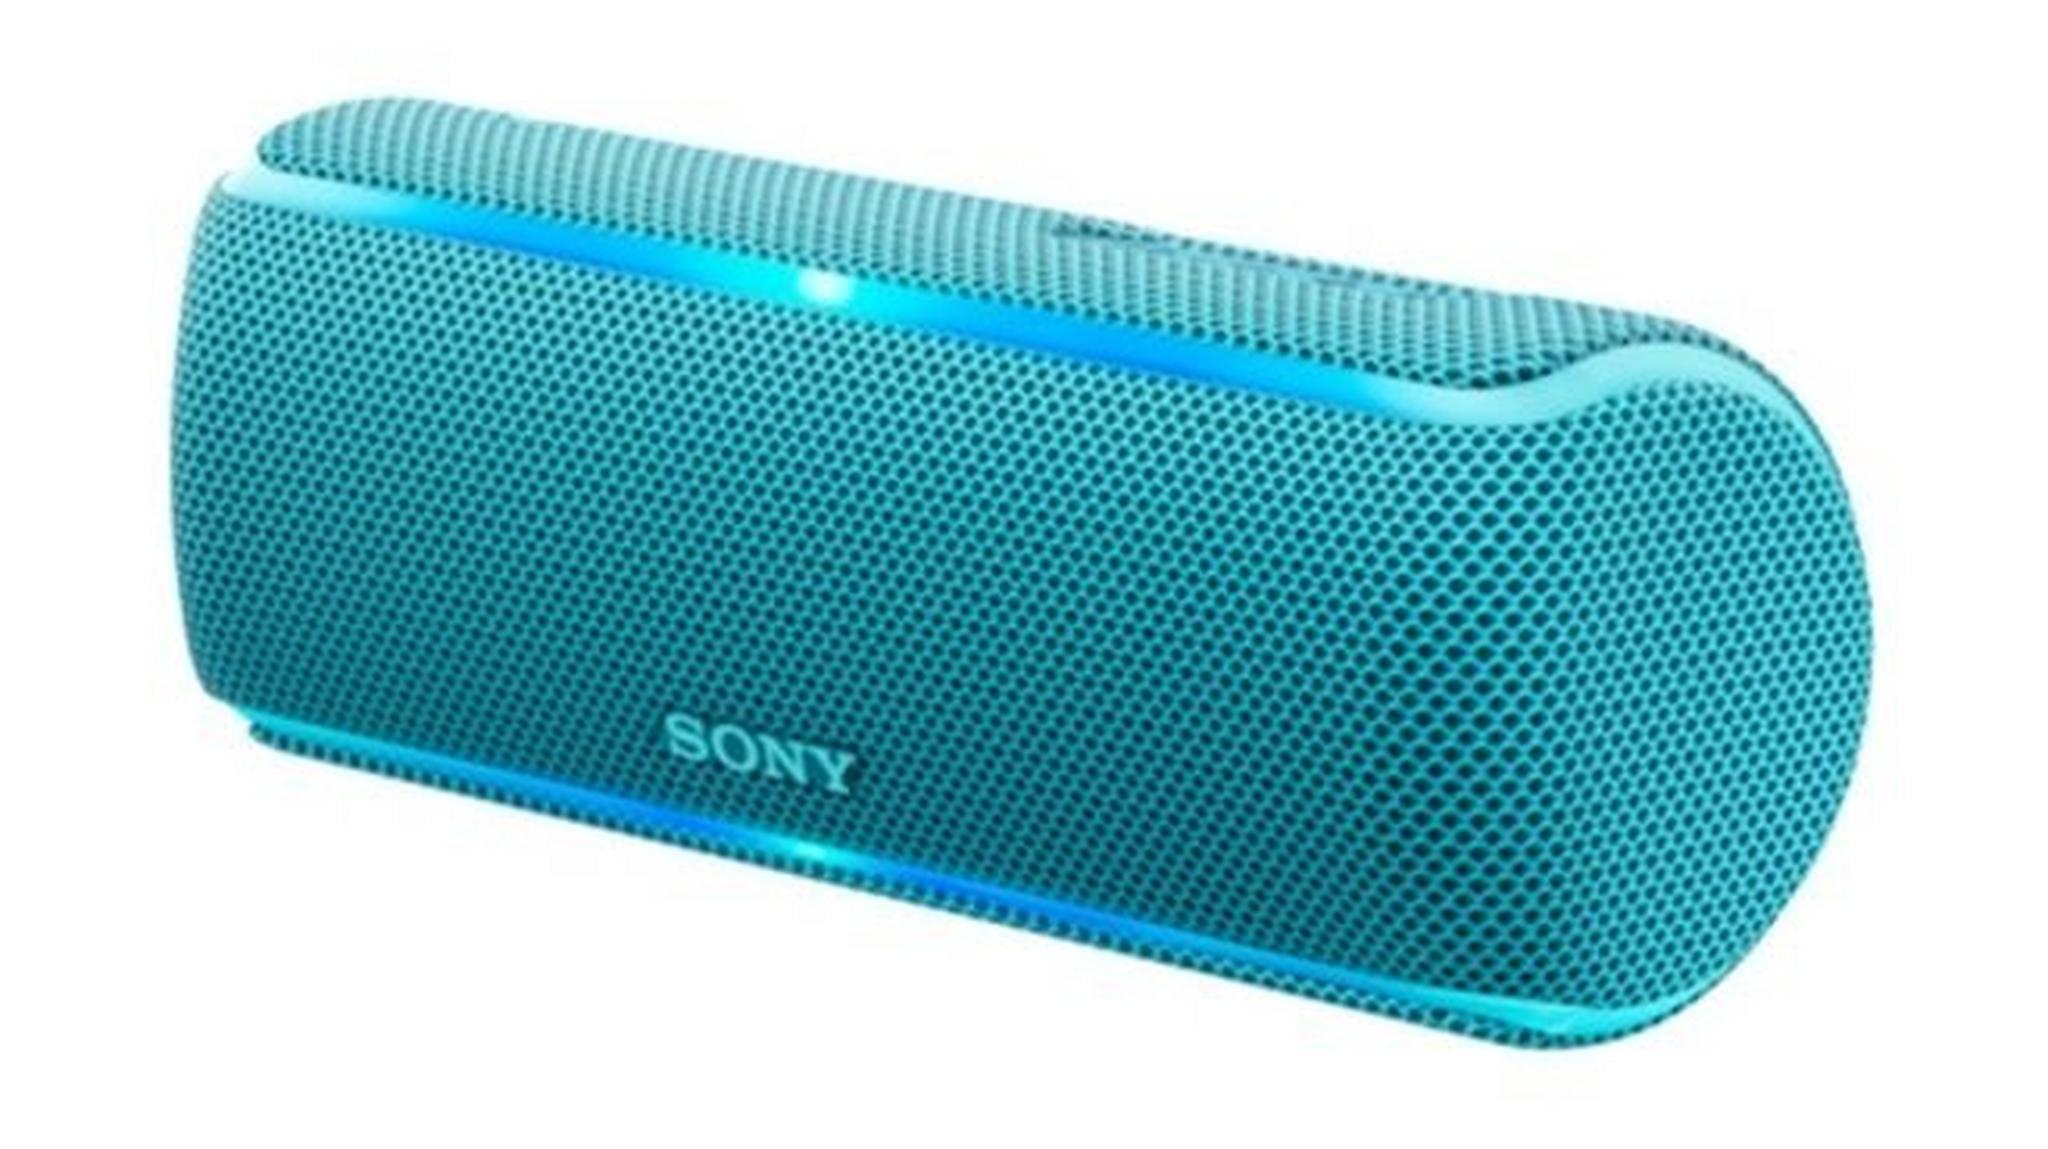 SONY XB21 Extra Bass Portable Bluetooth Speaker - Blue